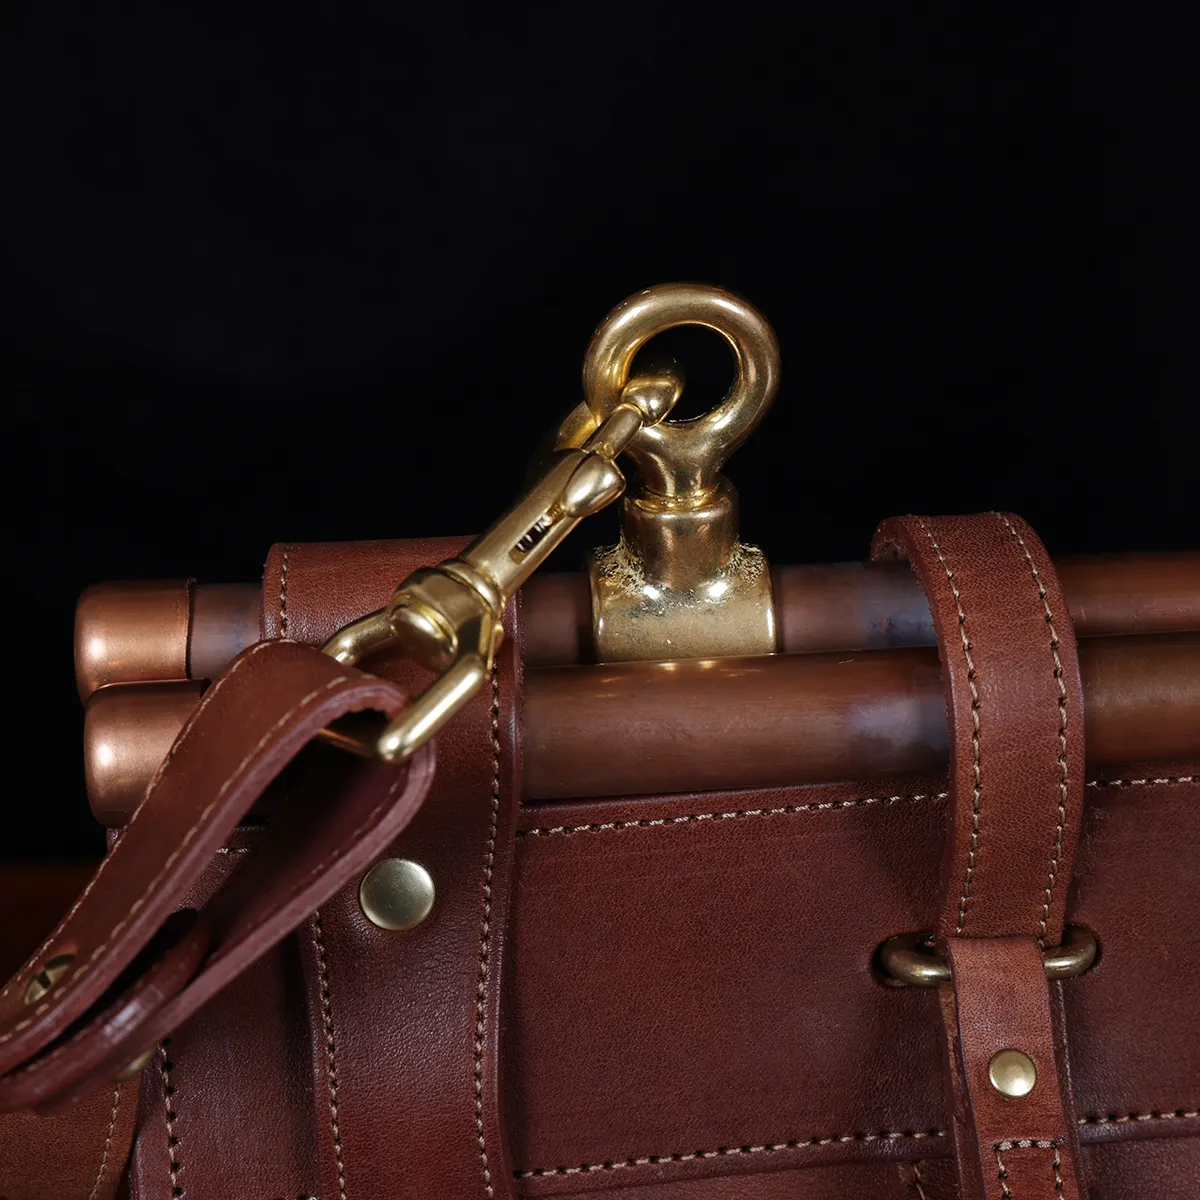 Vintage Gladstone Money Bag in Leather